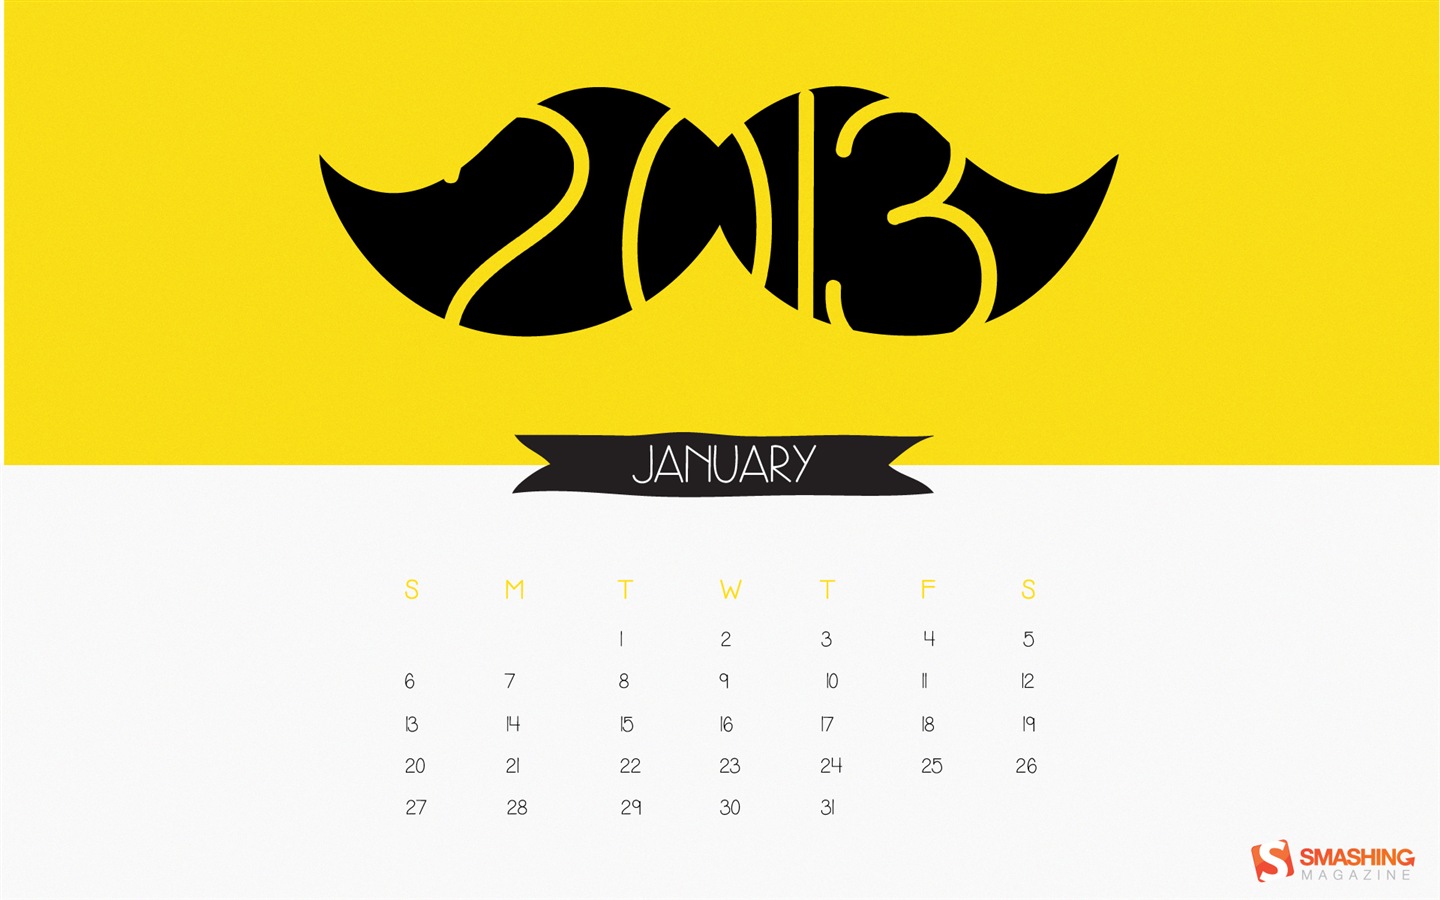 January 2013 Calendar wallpaper (1) #20 - 1440x900